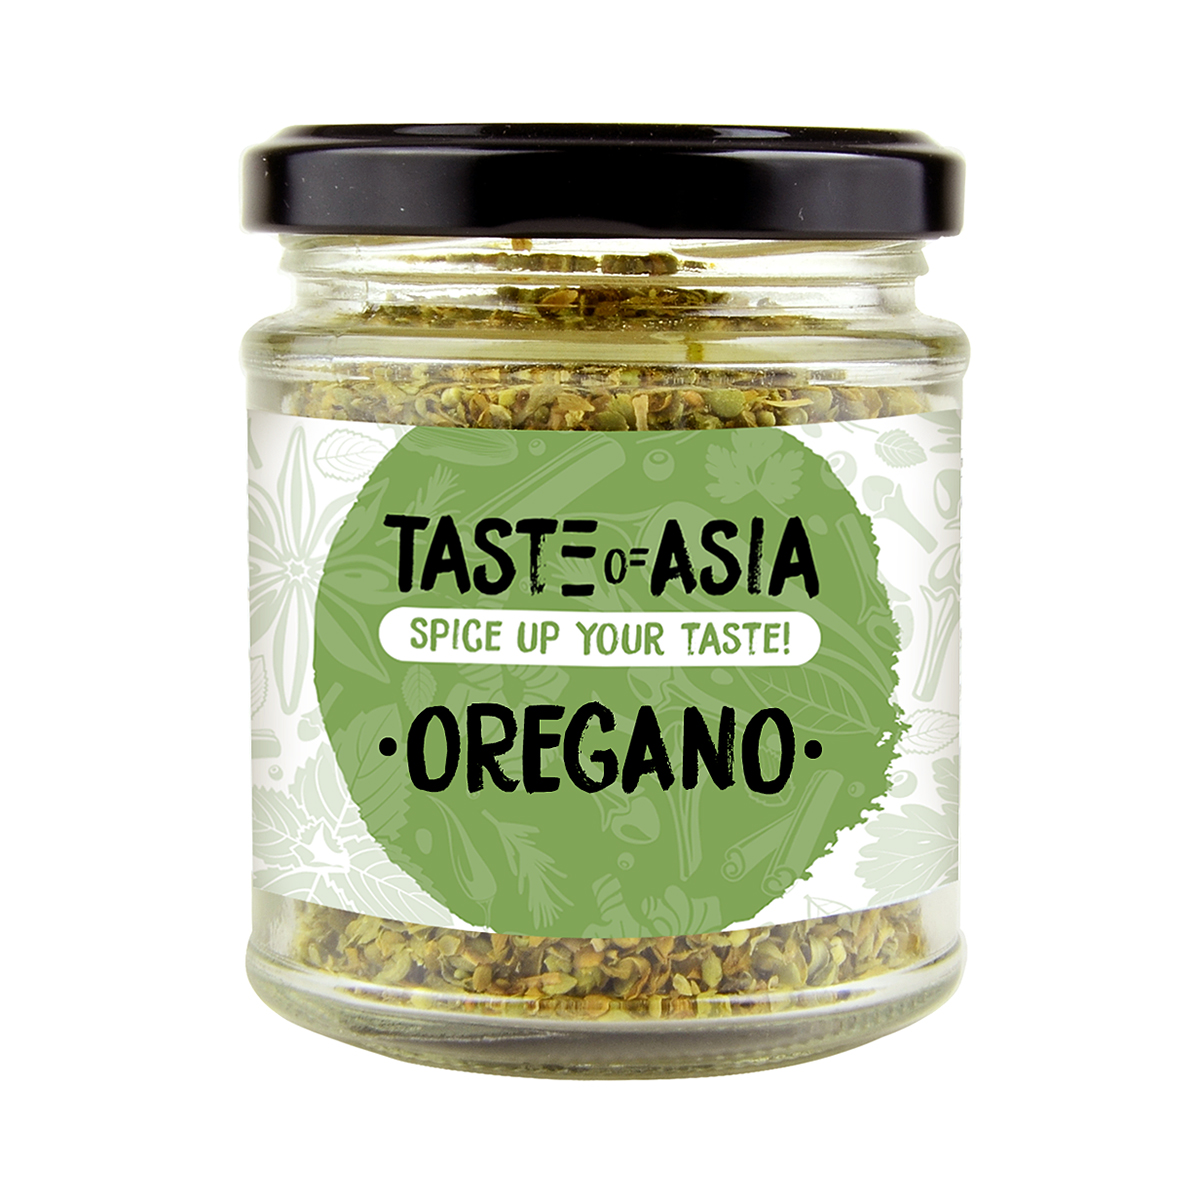 Private Label Taste of Asia - Oregano TOA 20g, asianfood.ro